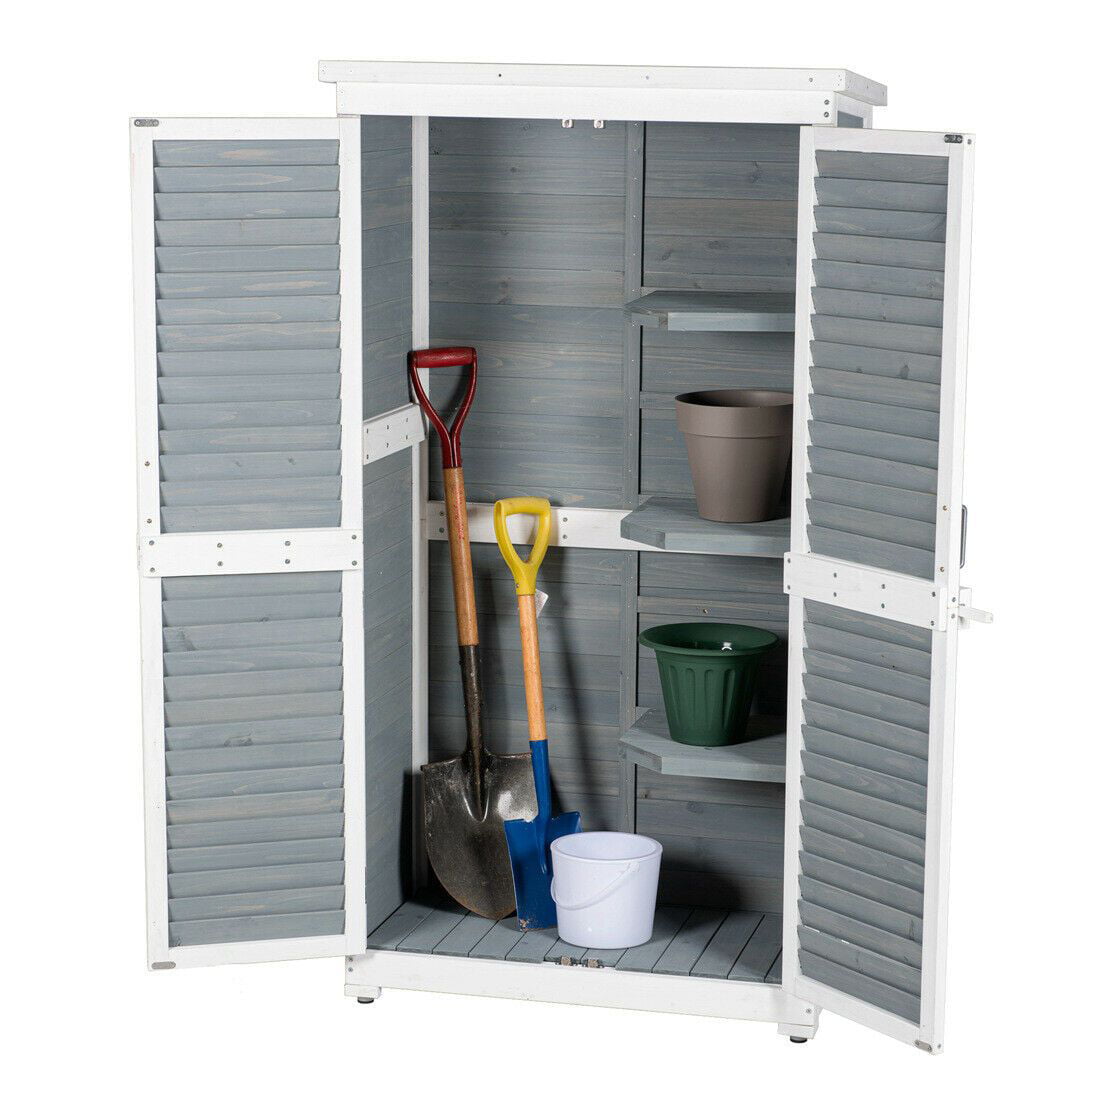 Outdoor Garden Wooden Storage Cabinet, Outdoor Storage Cupboard With Shelves